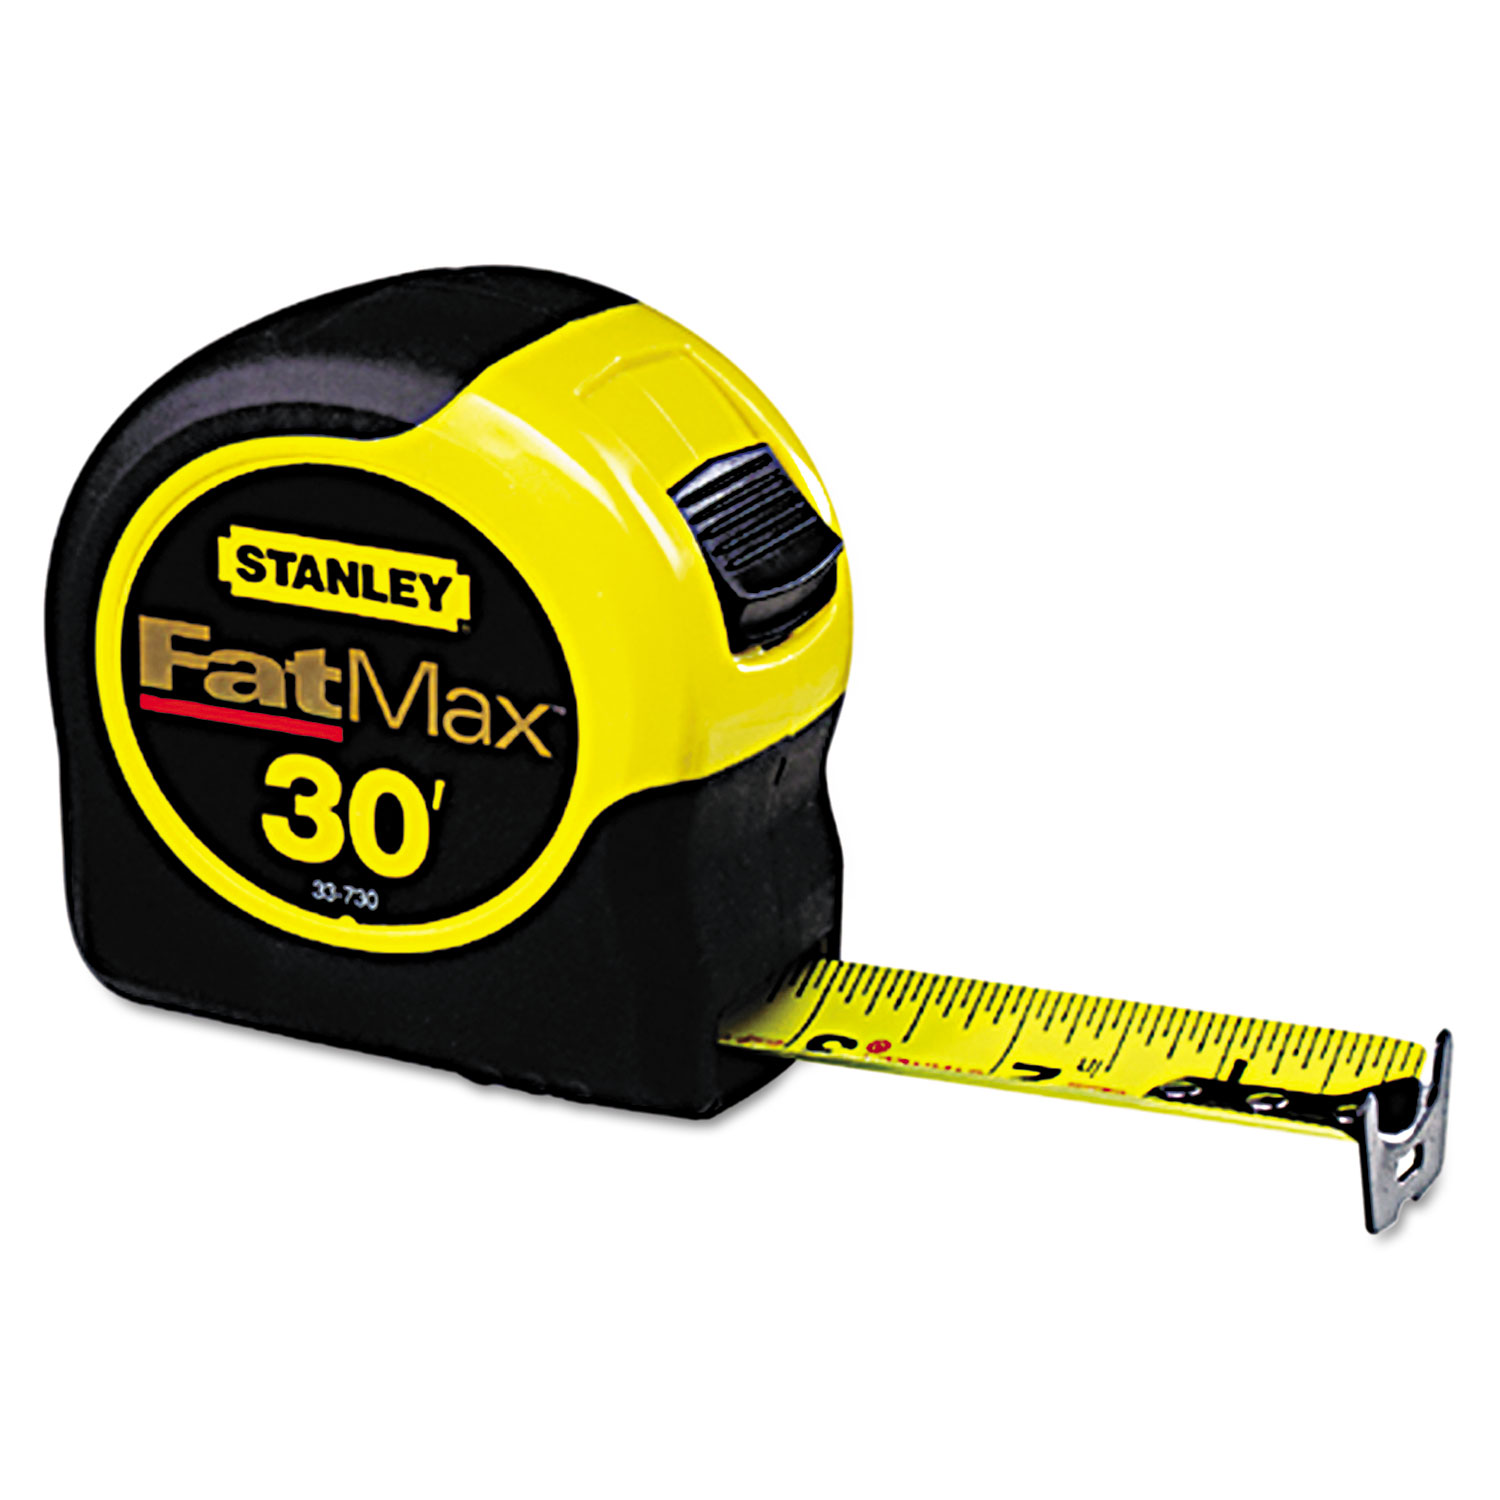  Stanley Tools 33-730 Fat Max Tape Rule, 1 1/4 x 30ft, Plastic Case, Black/Yellow, 1/16 Graduation (SQN33730) 